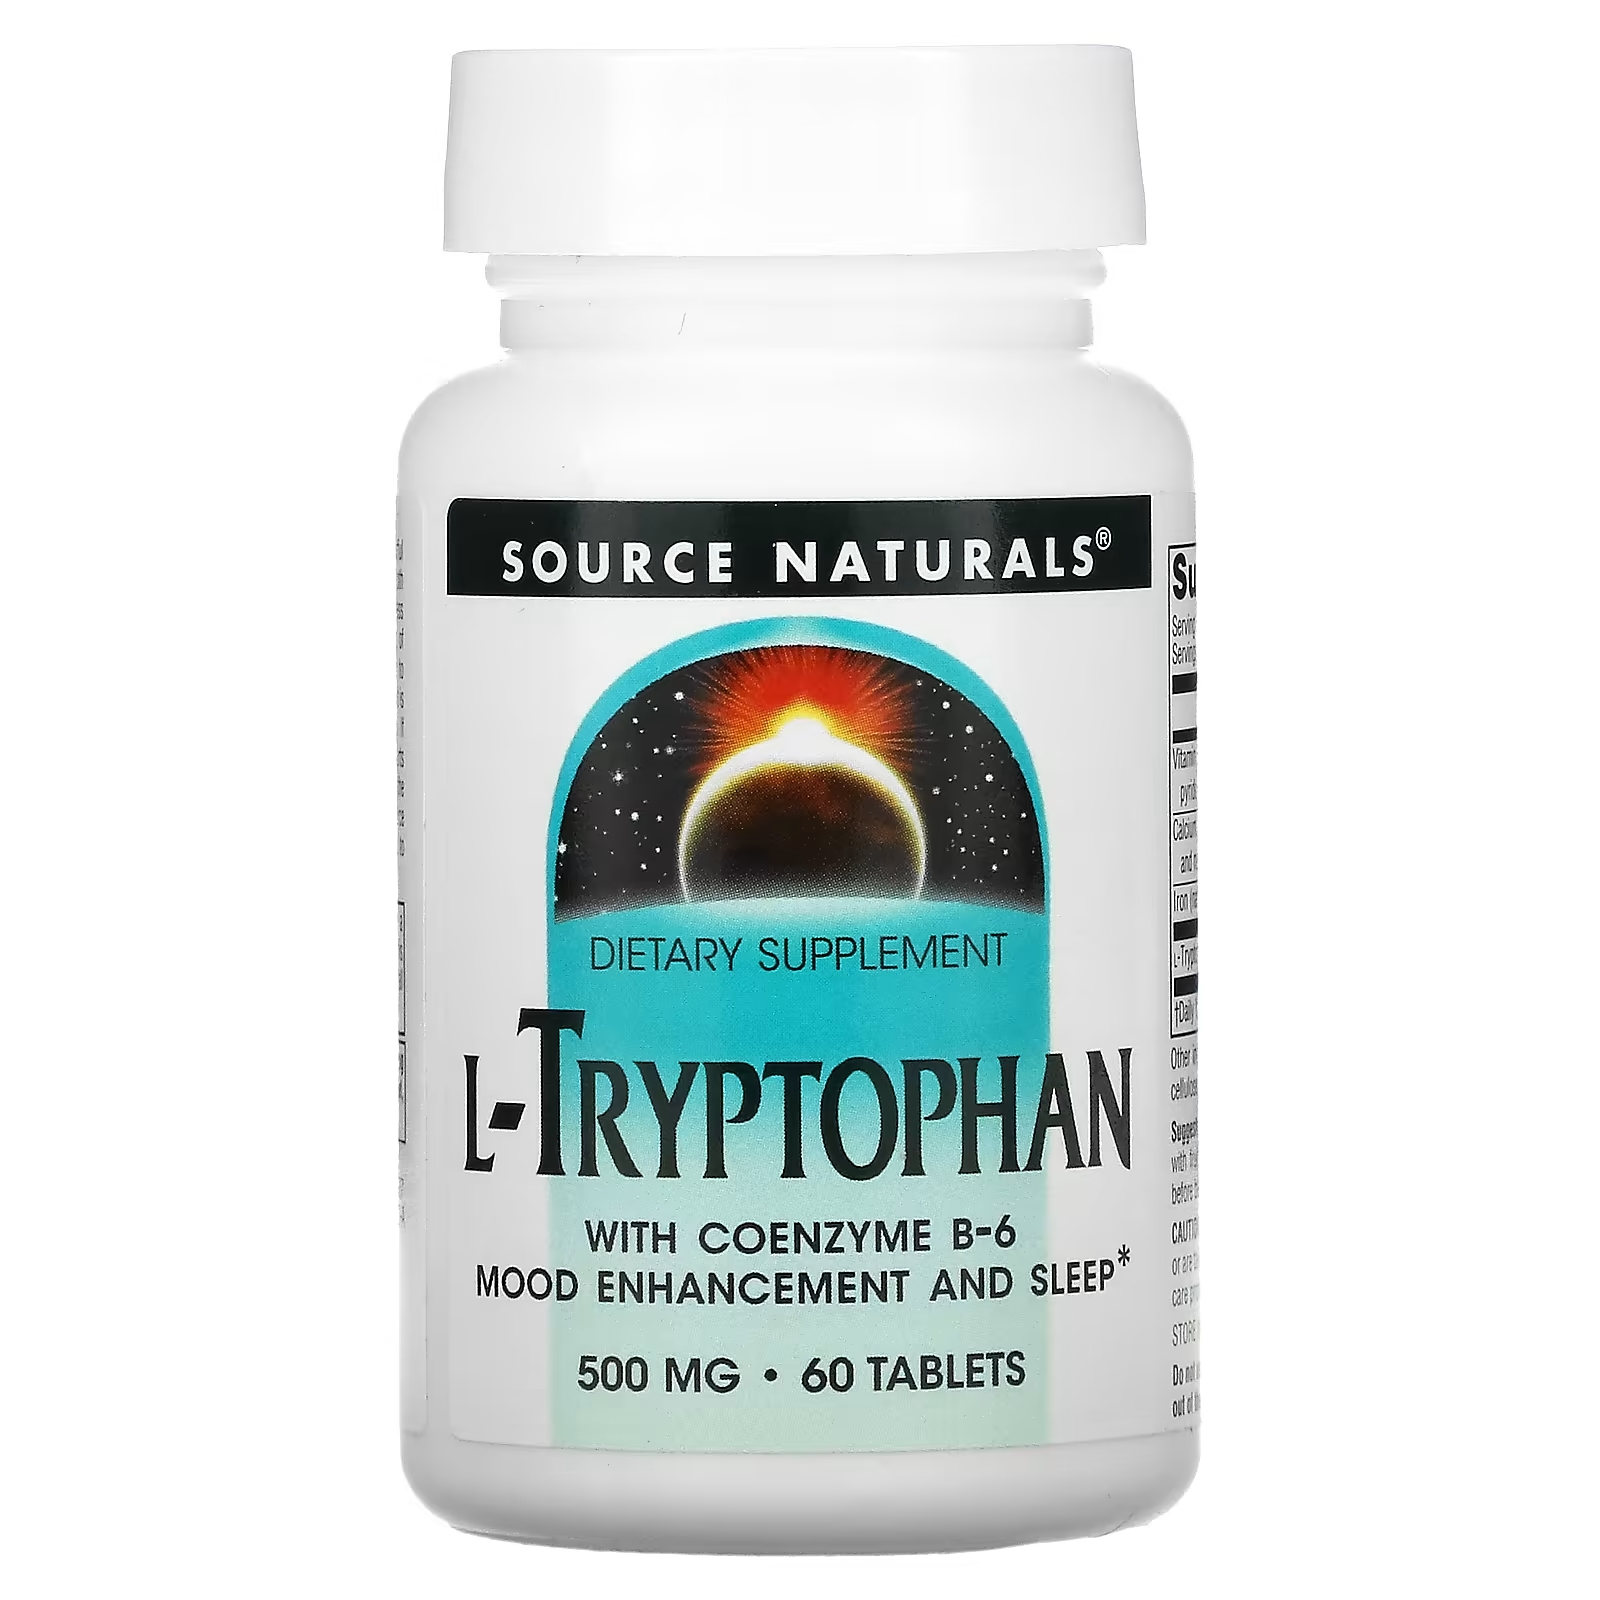 Source Naturals L-триптофан с витамином В6 в коэнзимной форме 500 мг, 60 таблеток